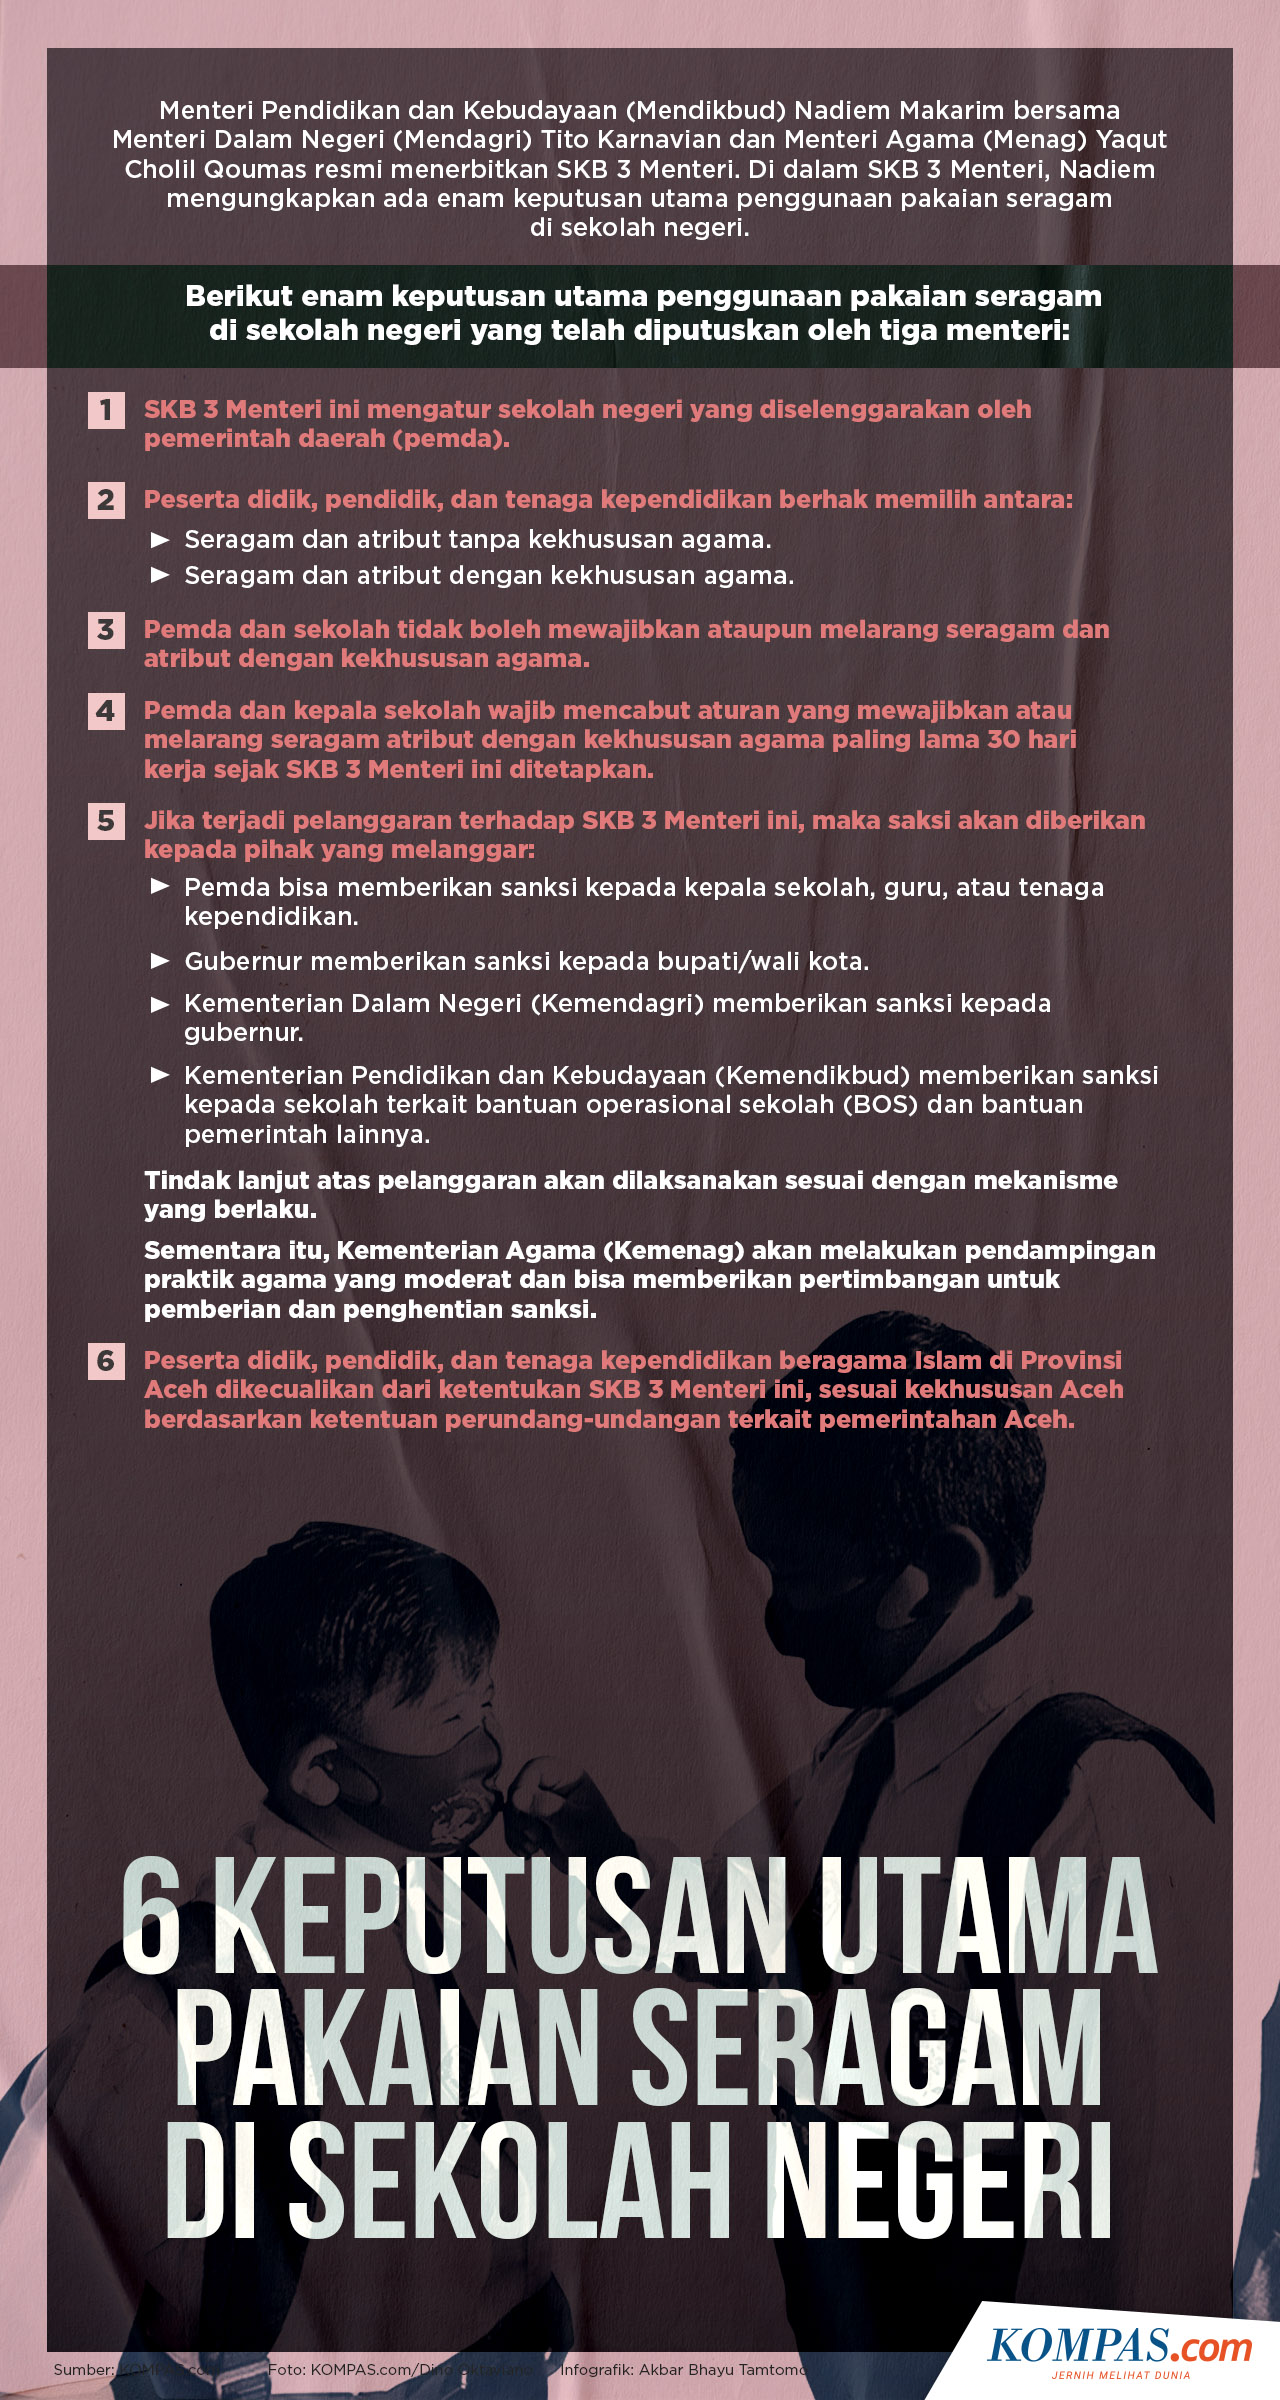 KOMPAS.com/Akbar Bhayu Tamtomo Infografik: 6 Keputusan Utama pakaian Seragam di Sekolah Negeri